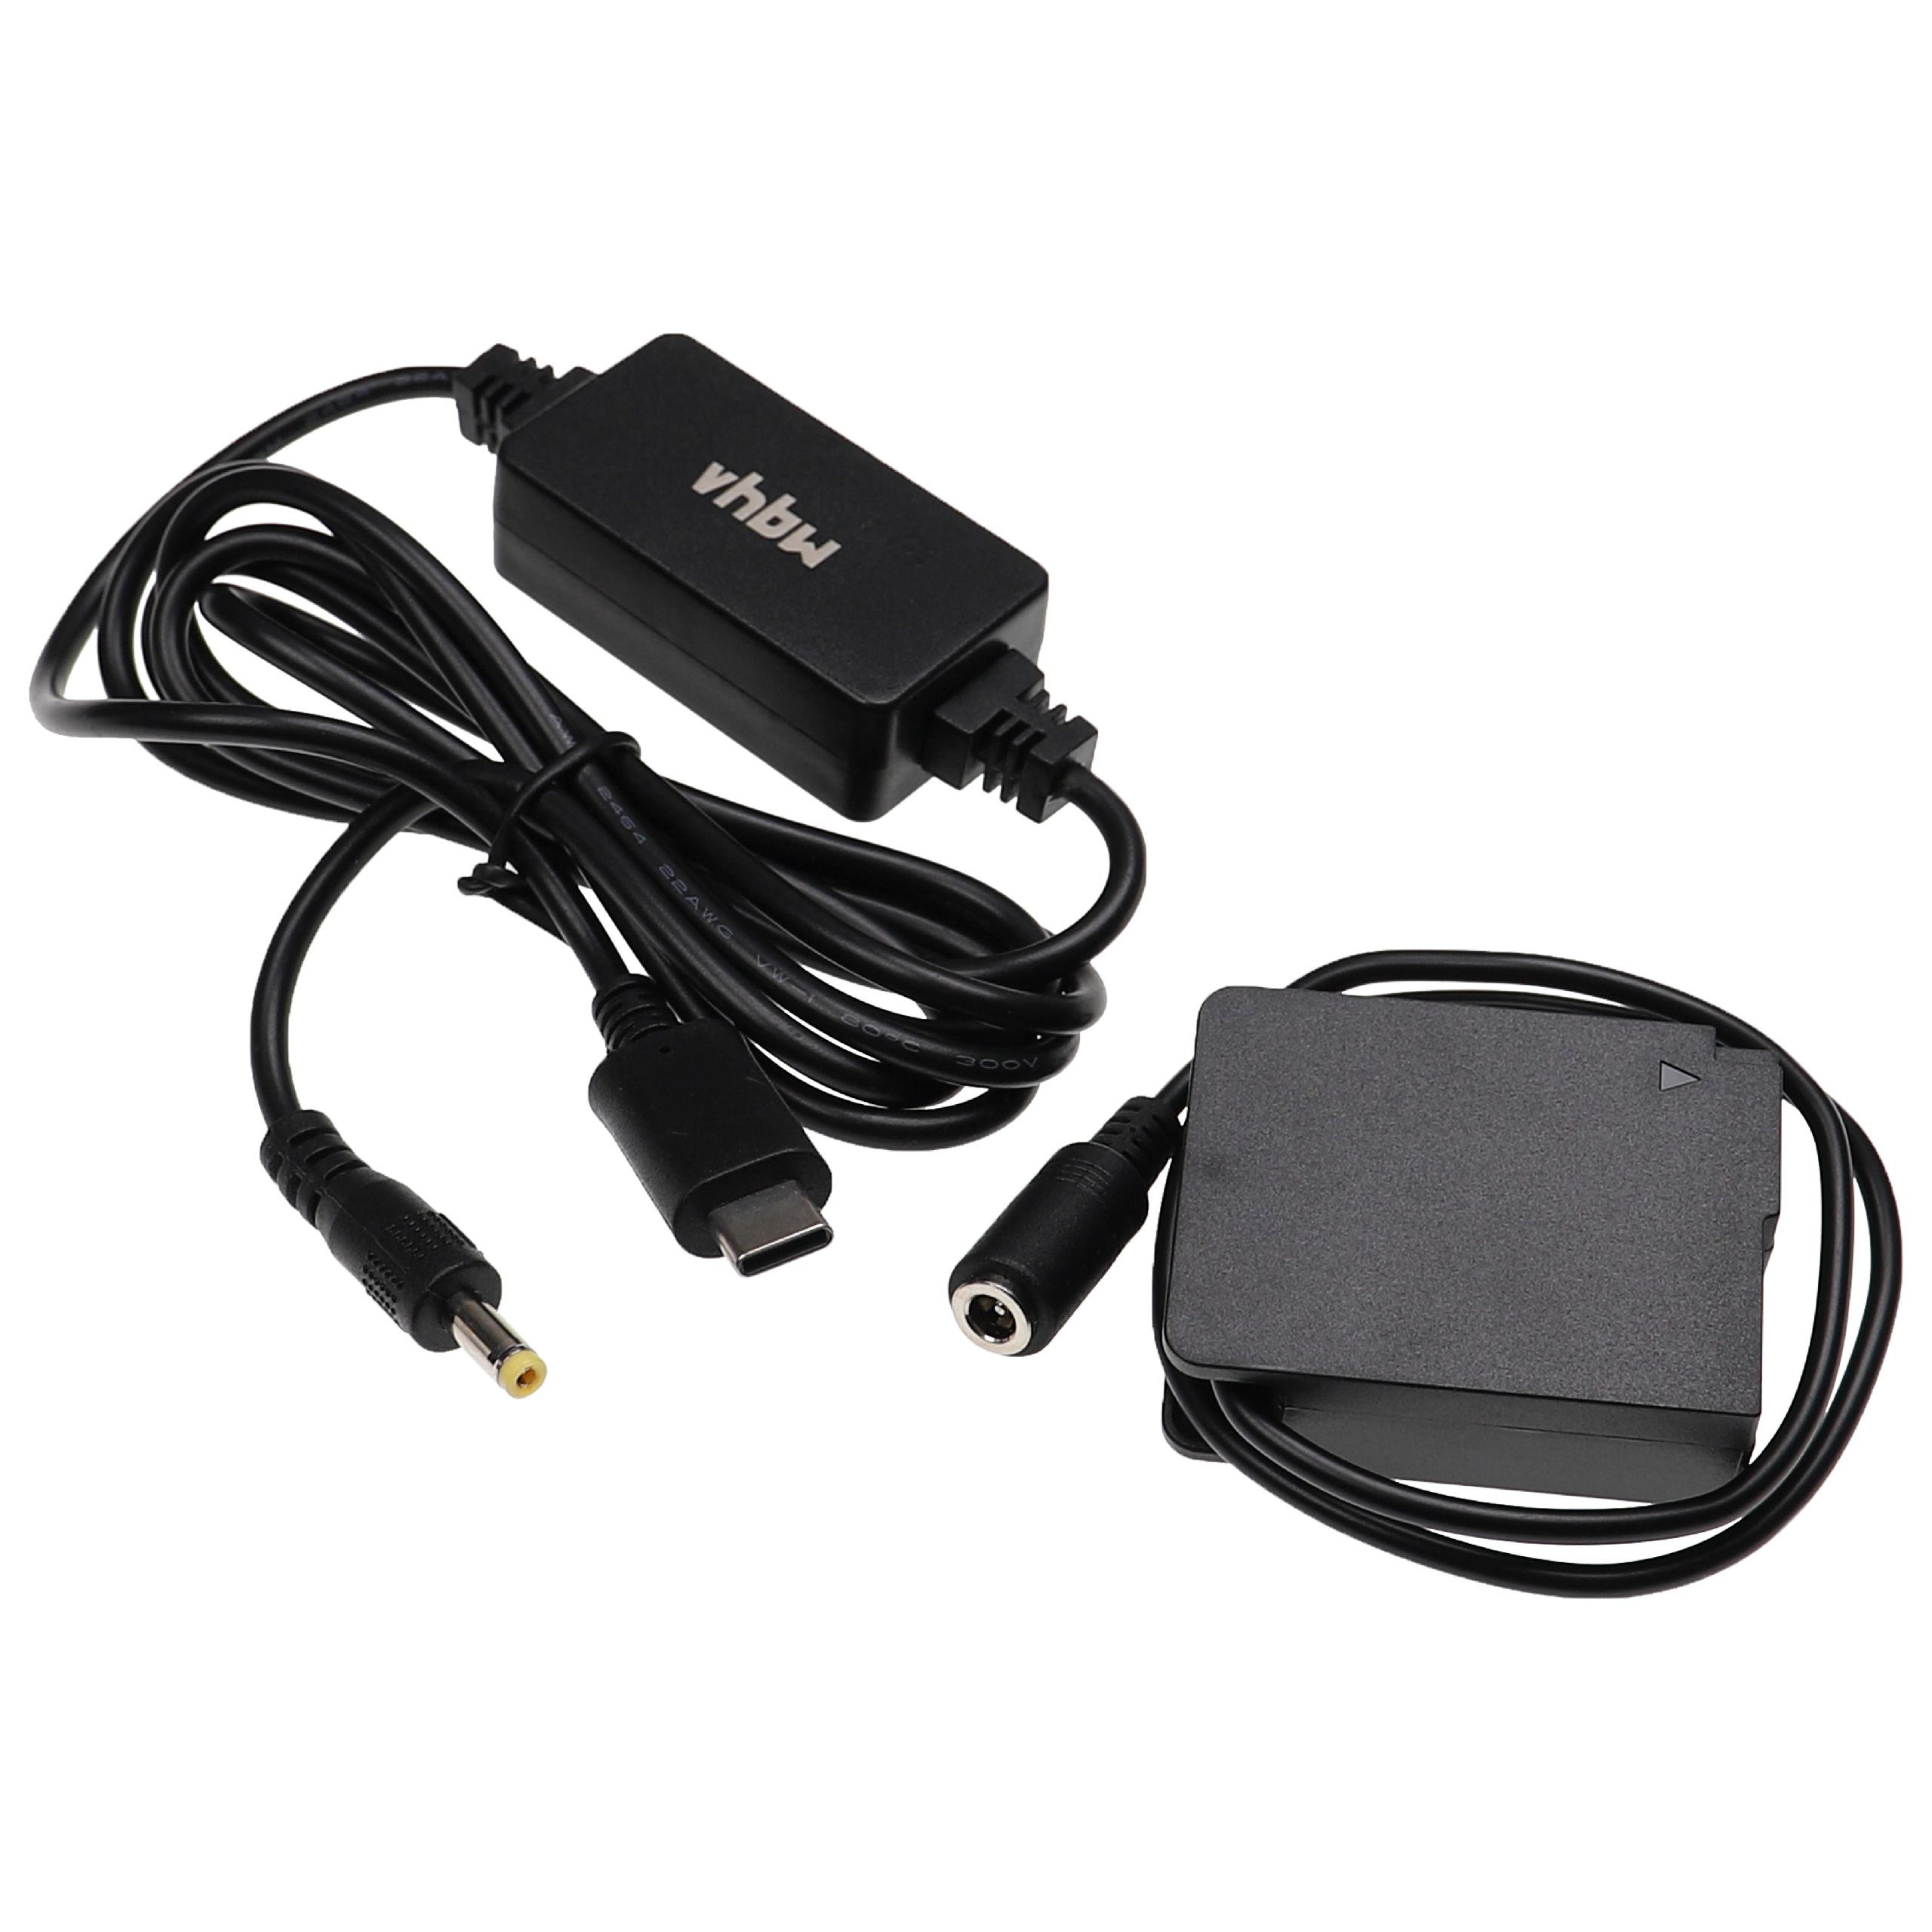 Fuente alimentación USB reemplaza Panasonic DMW-AC8 para cámaras + acoplador CC reemplaza Panasonic DMW-DCC8